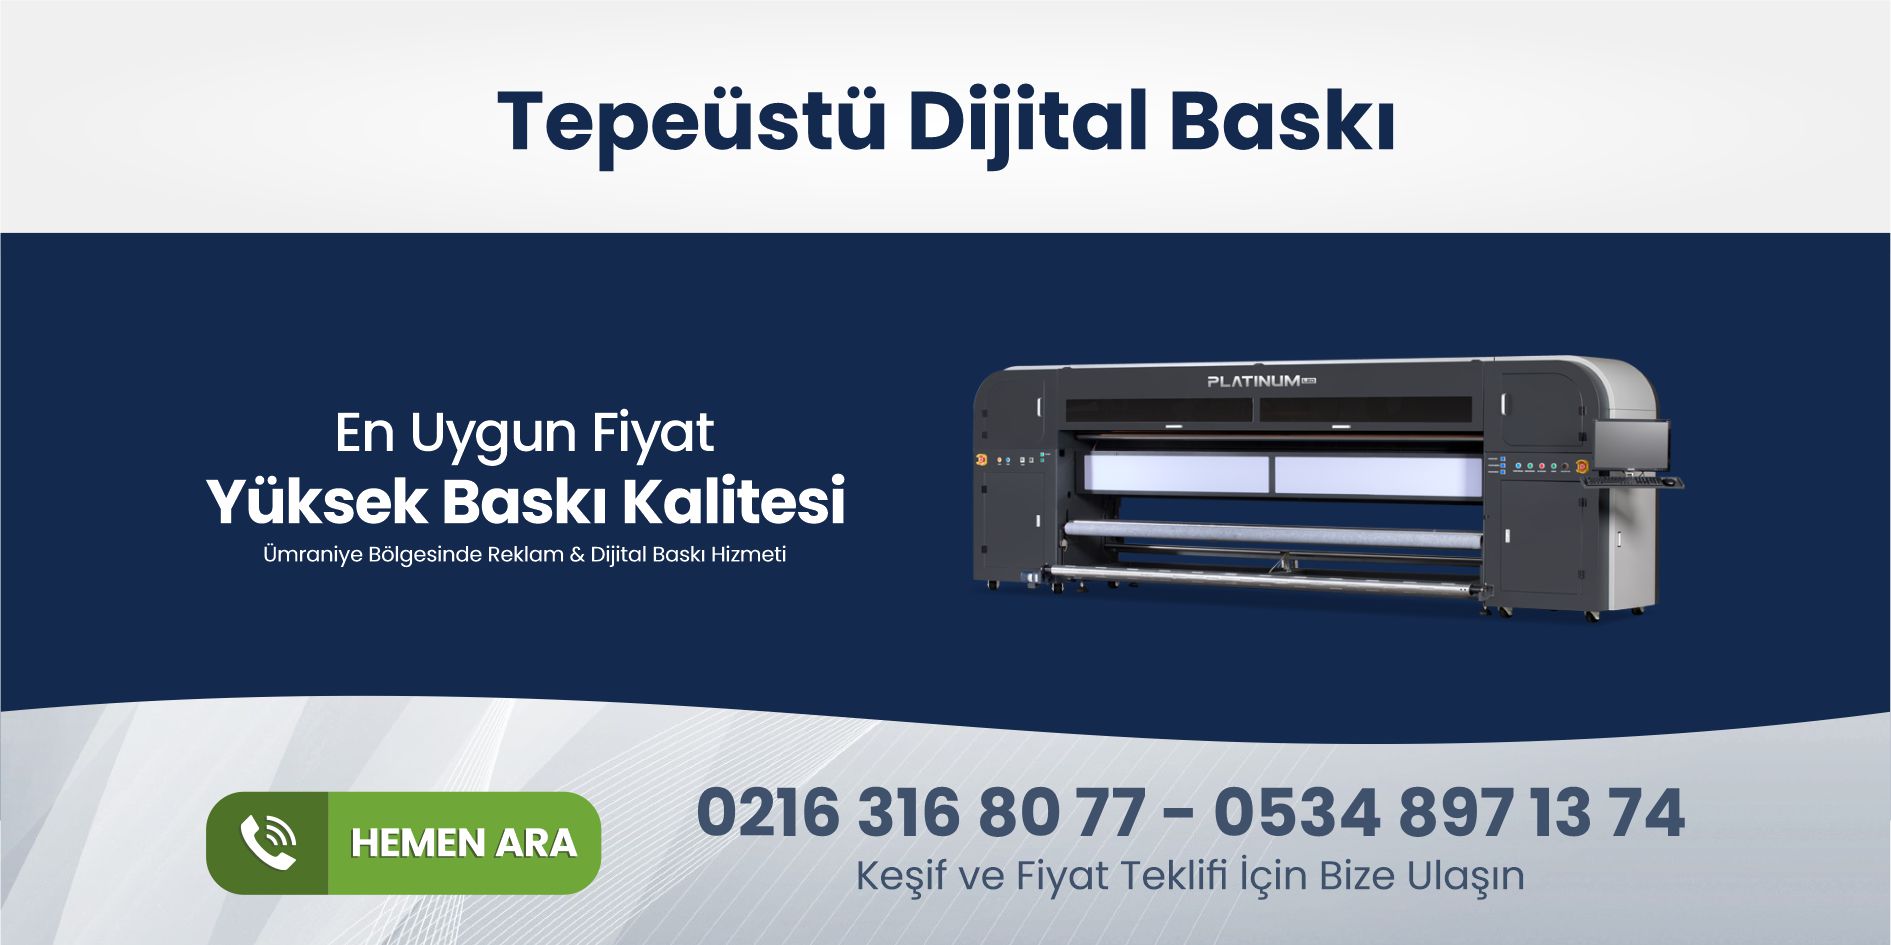 You are currently viewing Tepeüstü Dijital Baskı